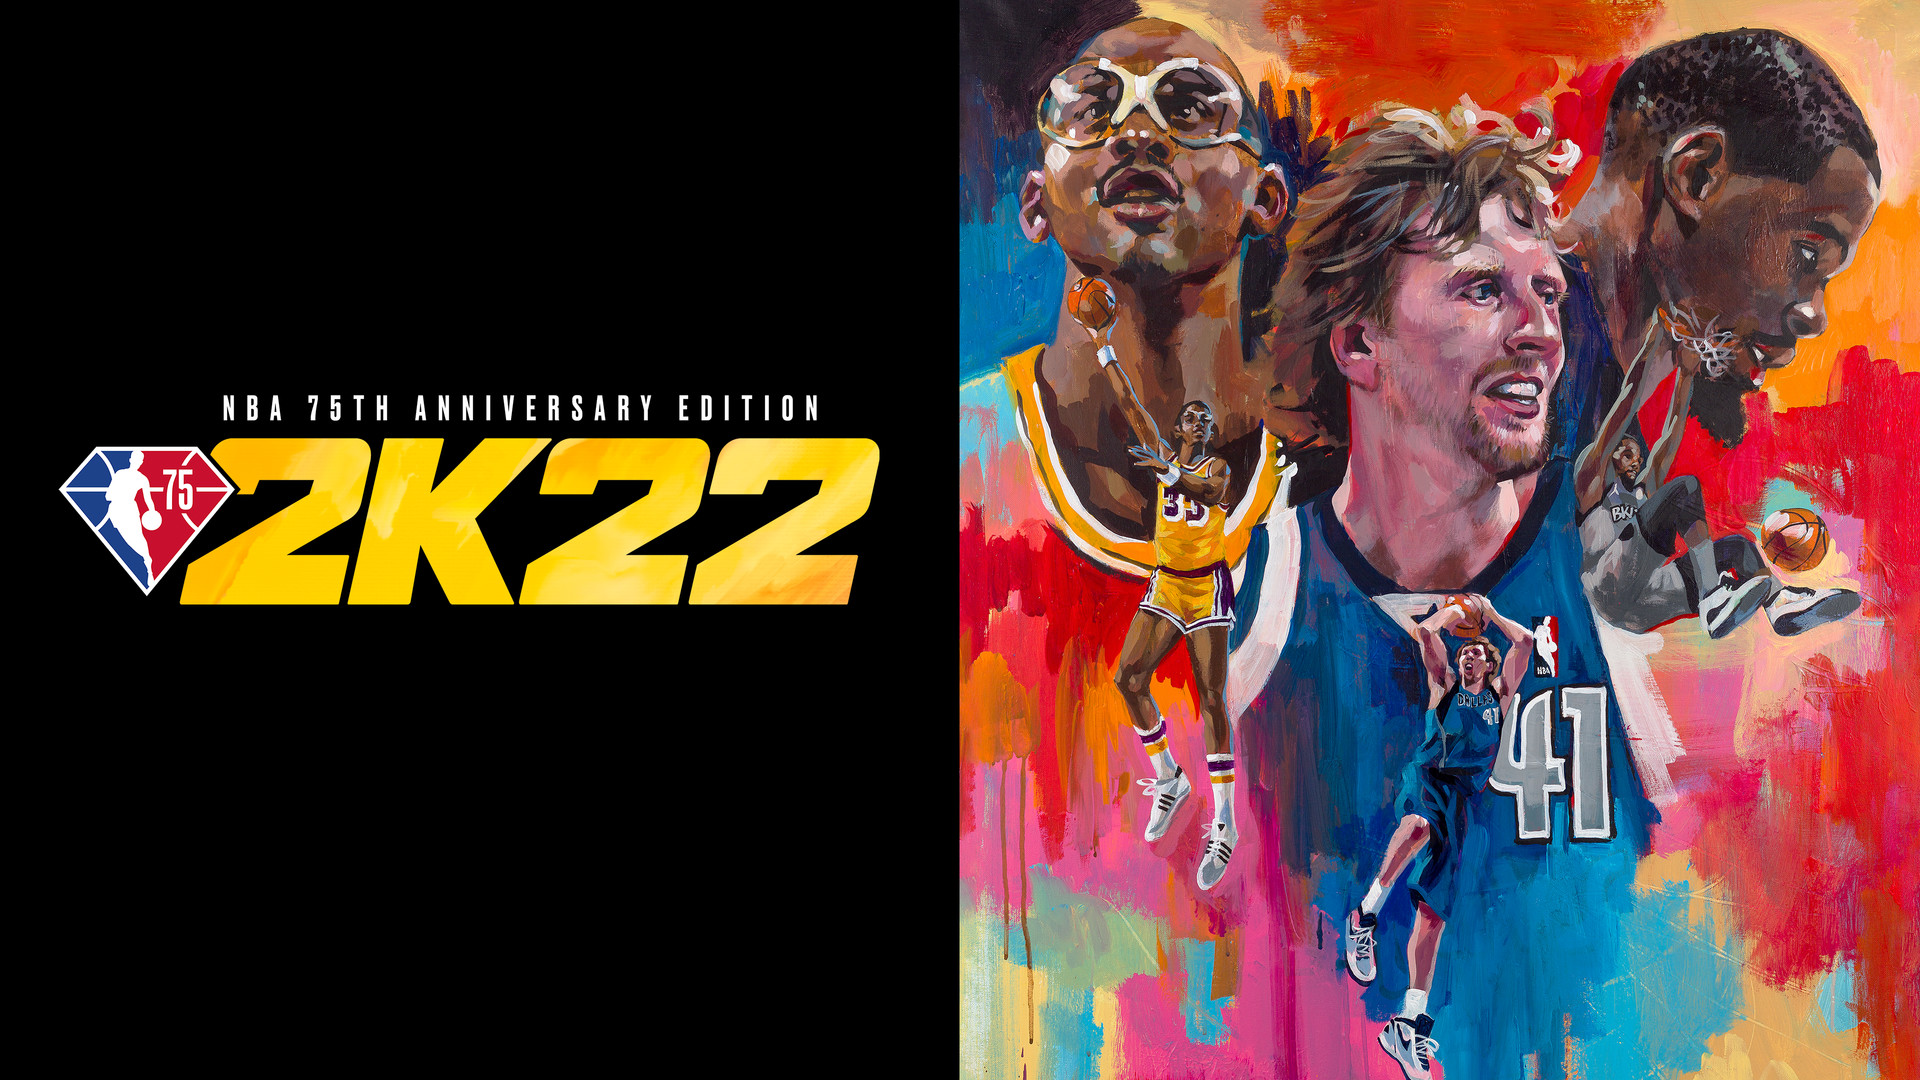 《NBA 2K22》正式上架Steam商城 預售價199元